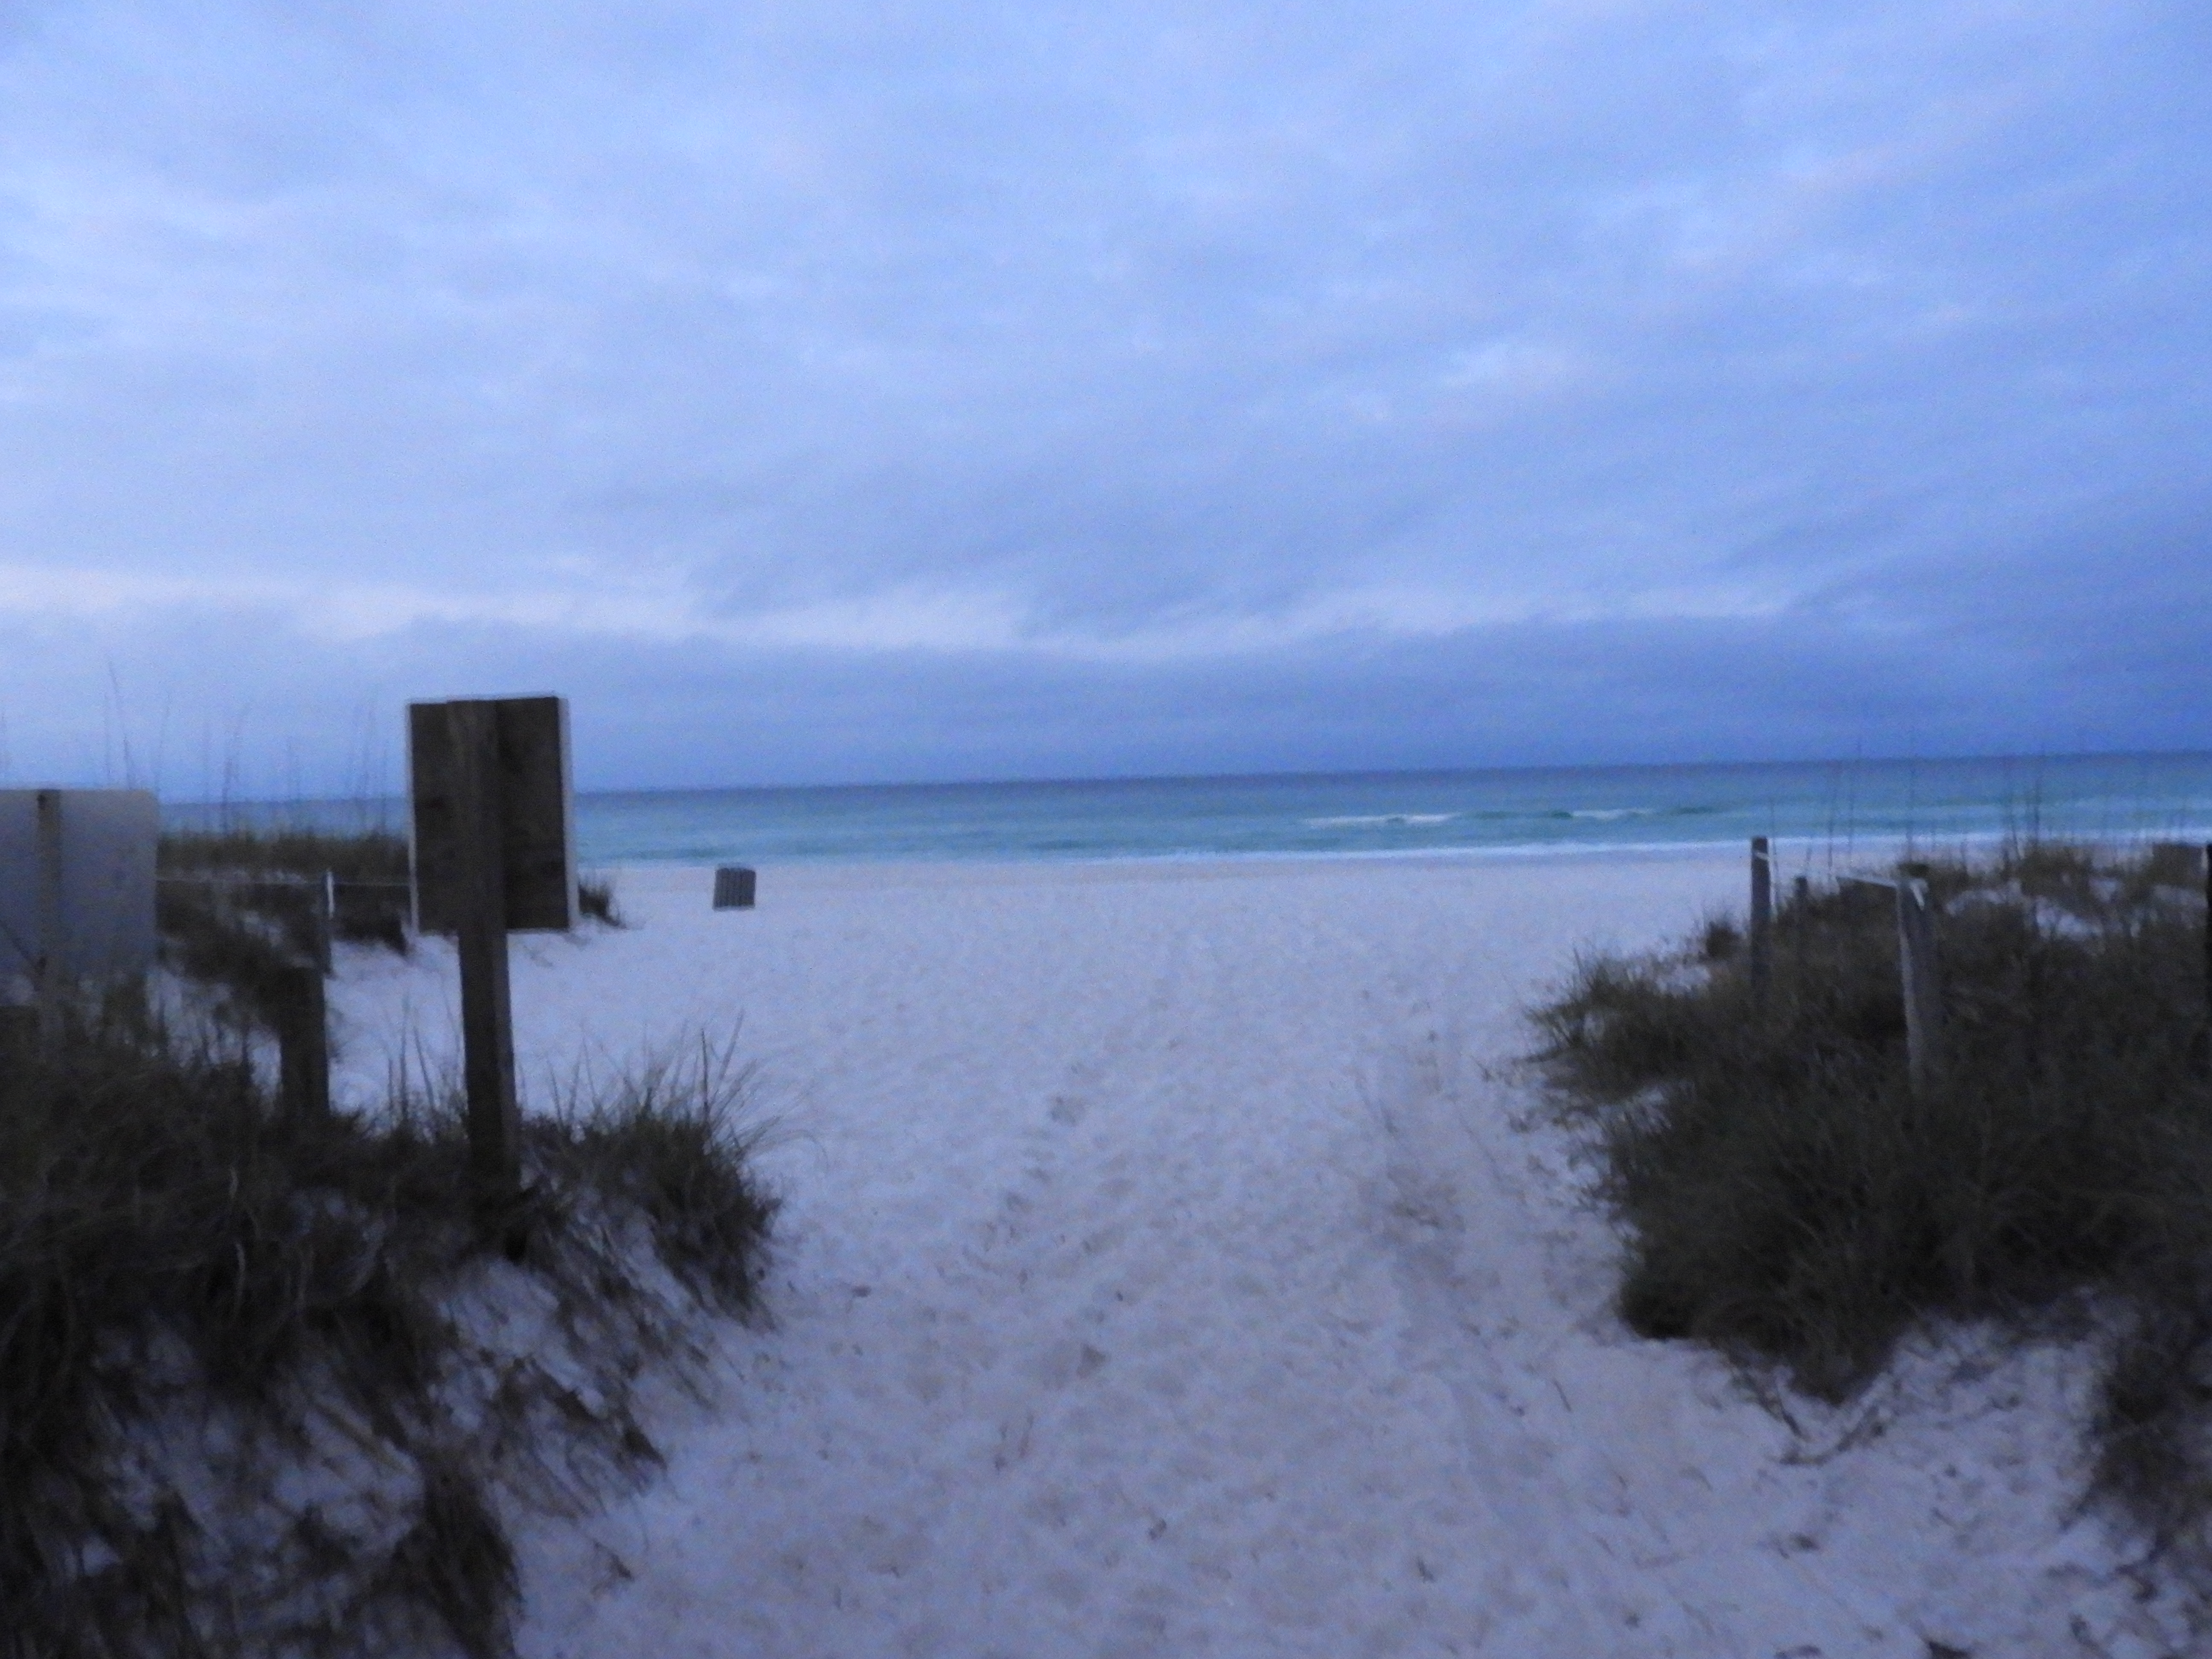 Pre-sunrise cloudy morning on the beach at Panama City Florida